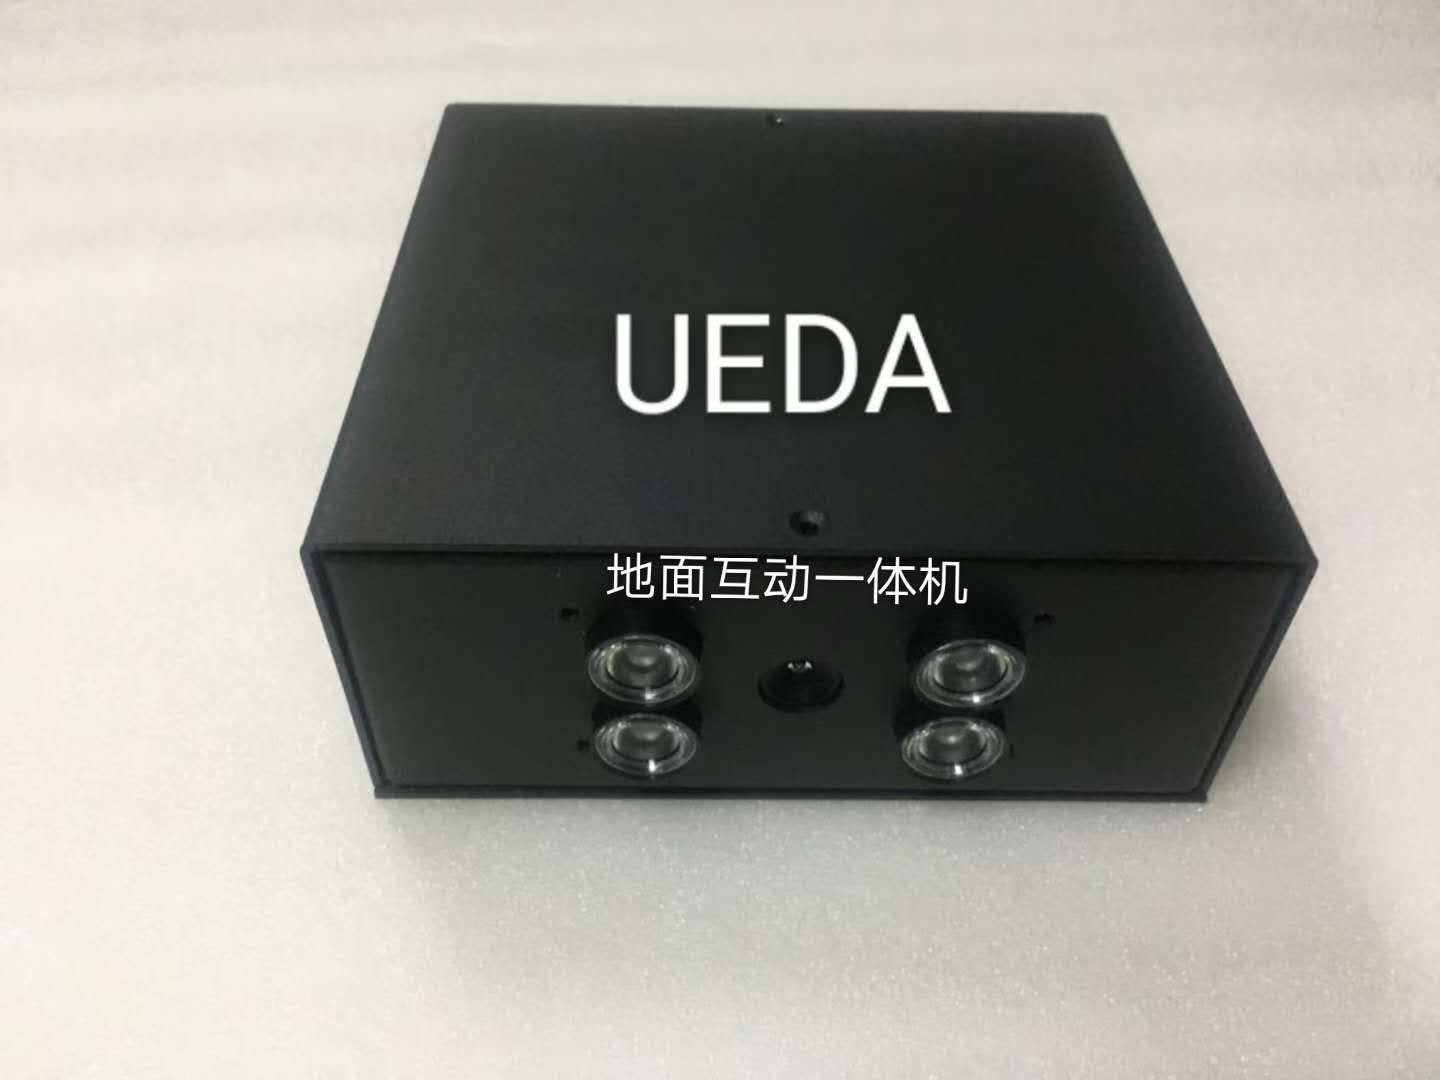 UEDA上田硬件融合器，上田地面互动投影一体机